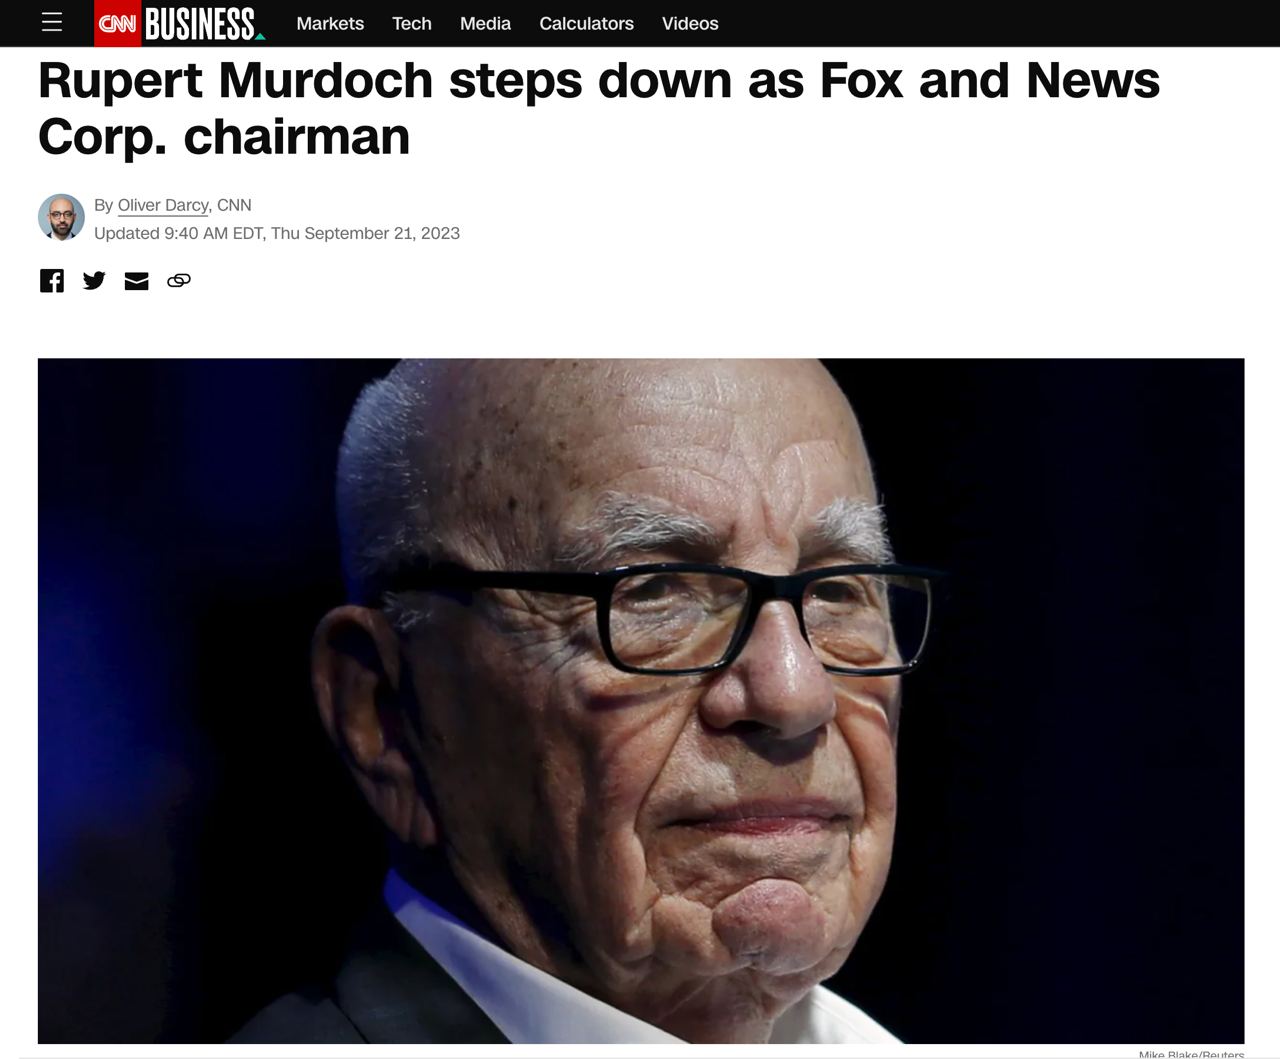 Руперт Мердок объявил, что уходит с поста председателя Fox and News Corp